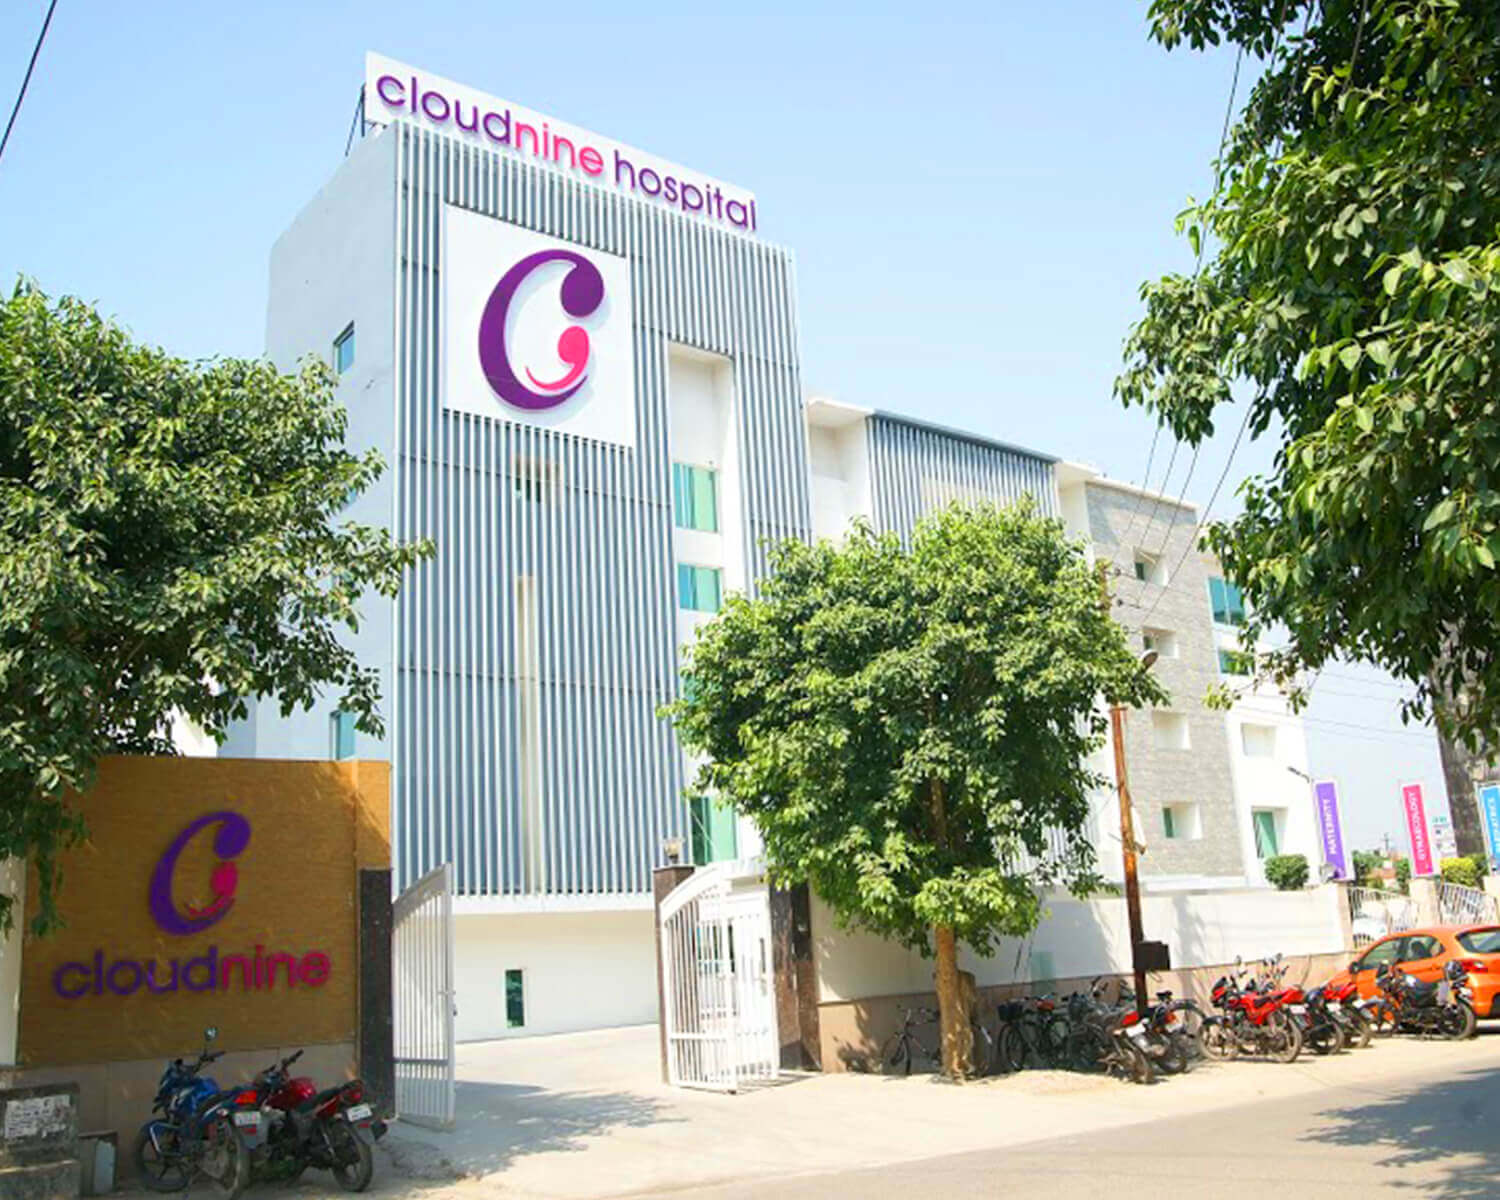 Cloudnine Hospital - Noida-Travocure